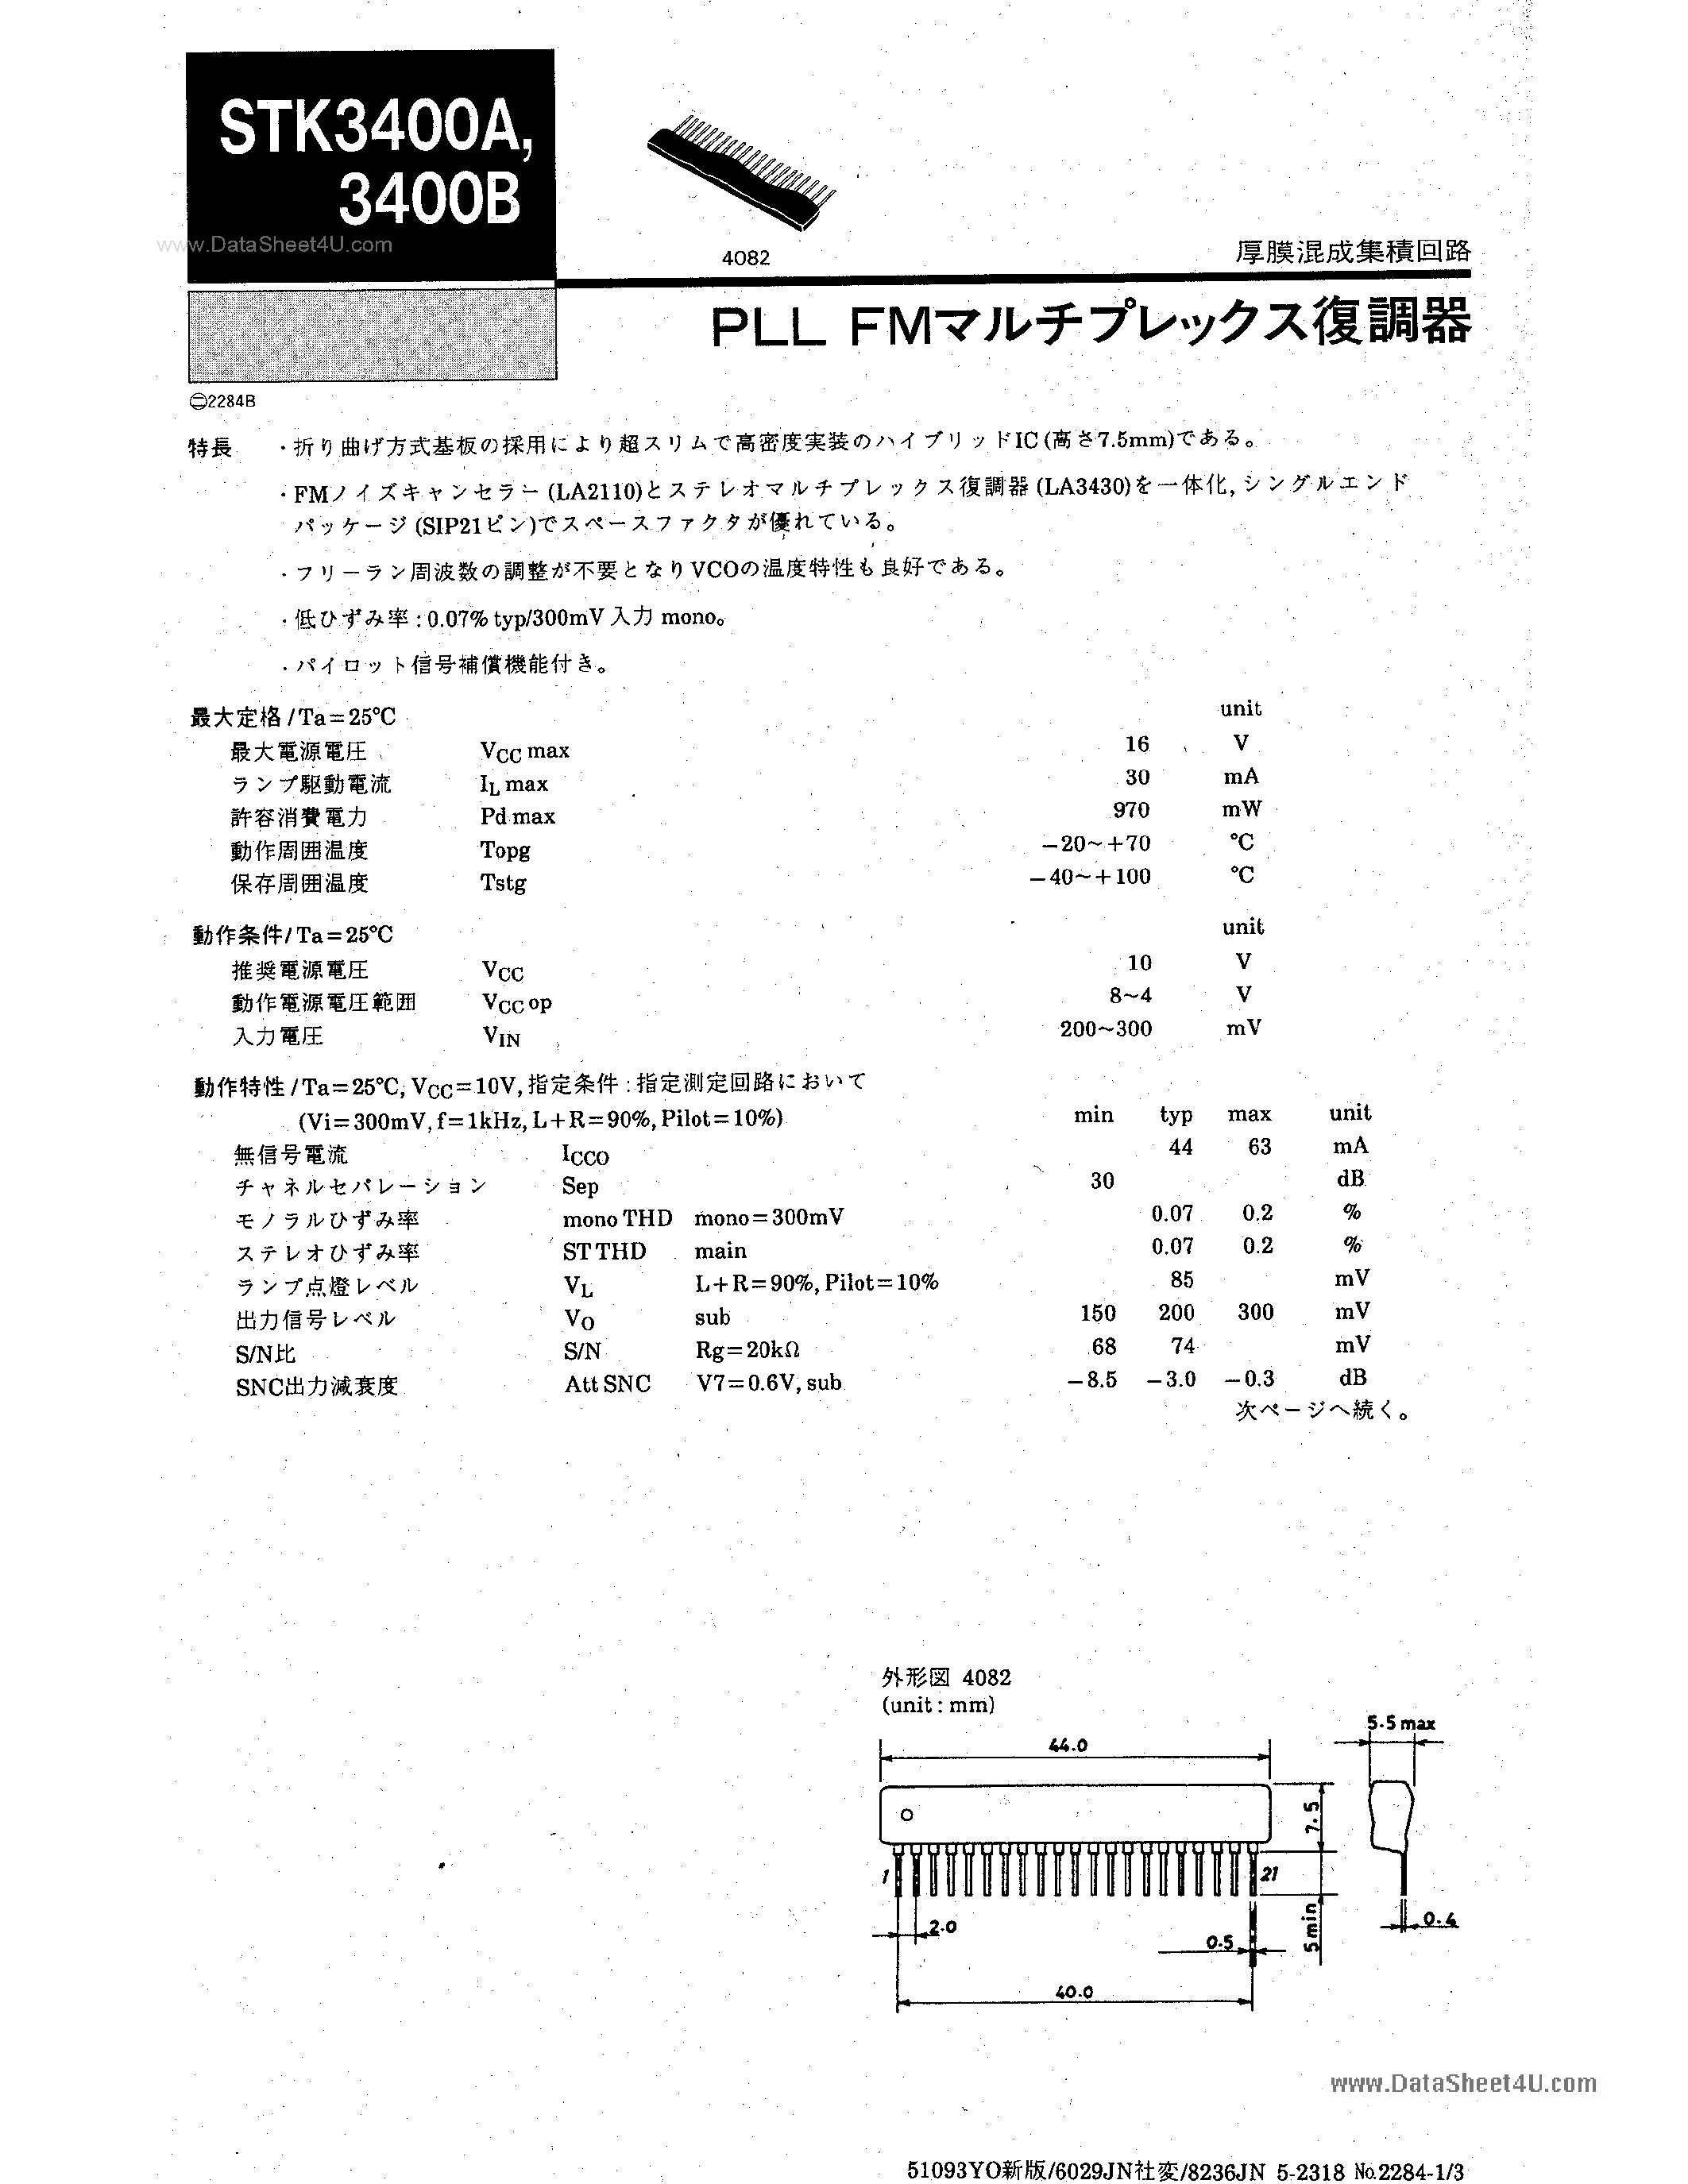 Datasheet STK3400A - PLL FM page 1